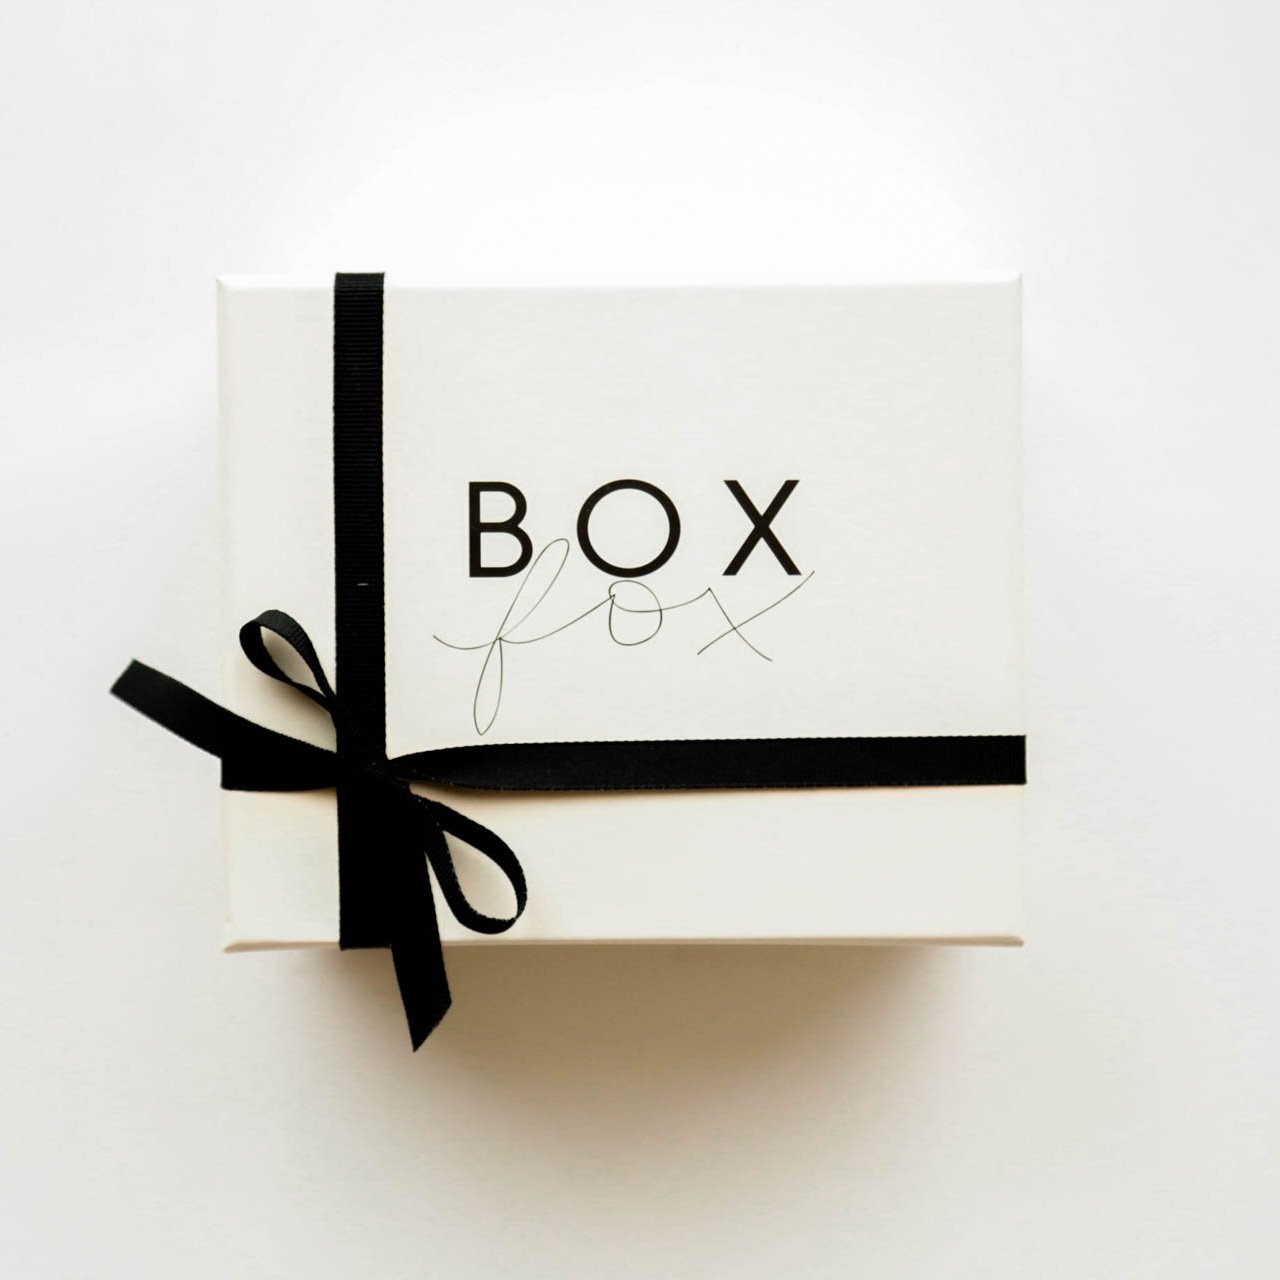 SDG TEST - BUILD A BOXFOX